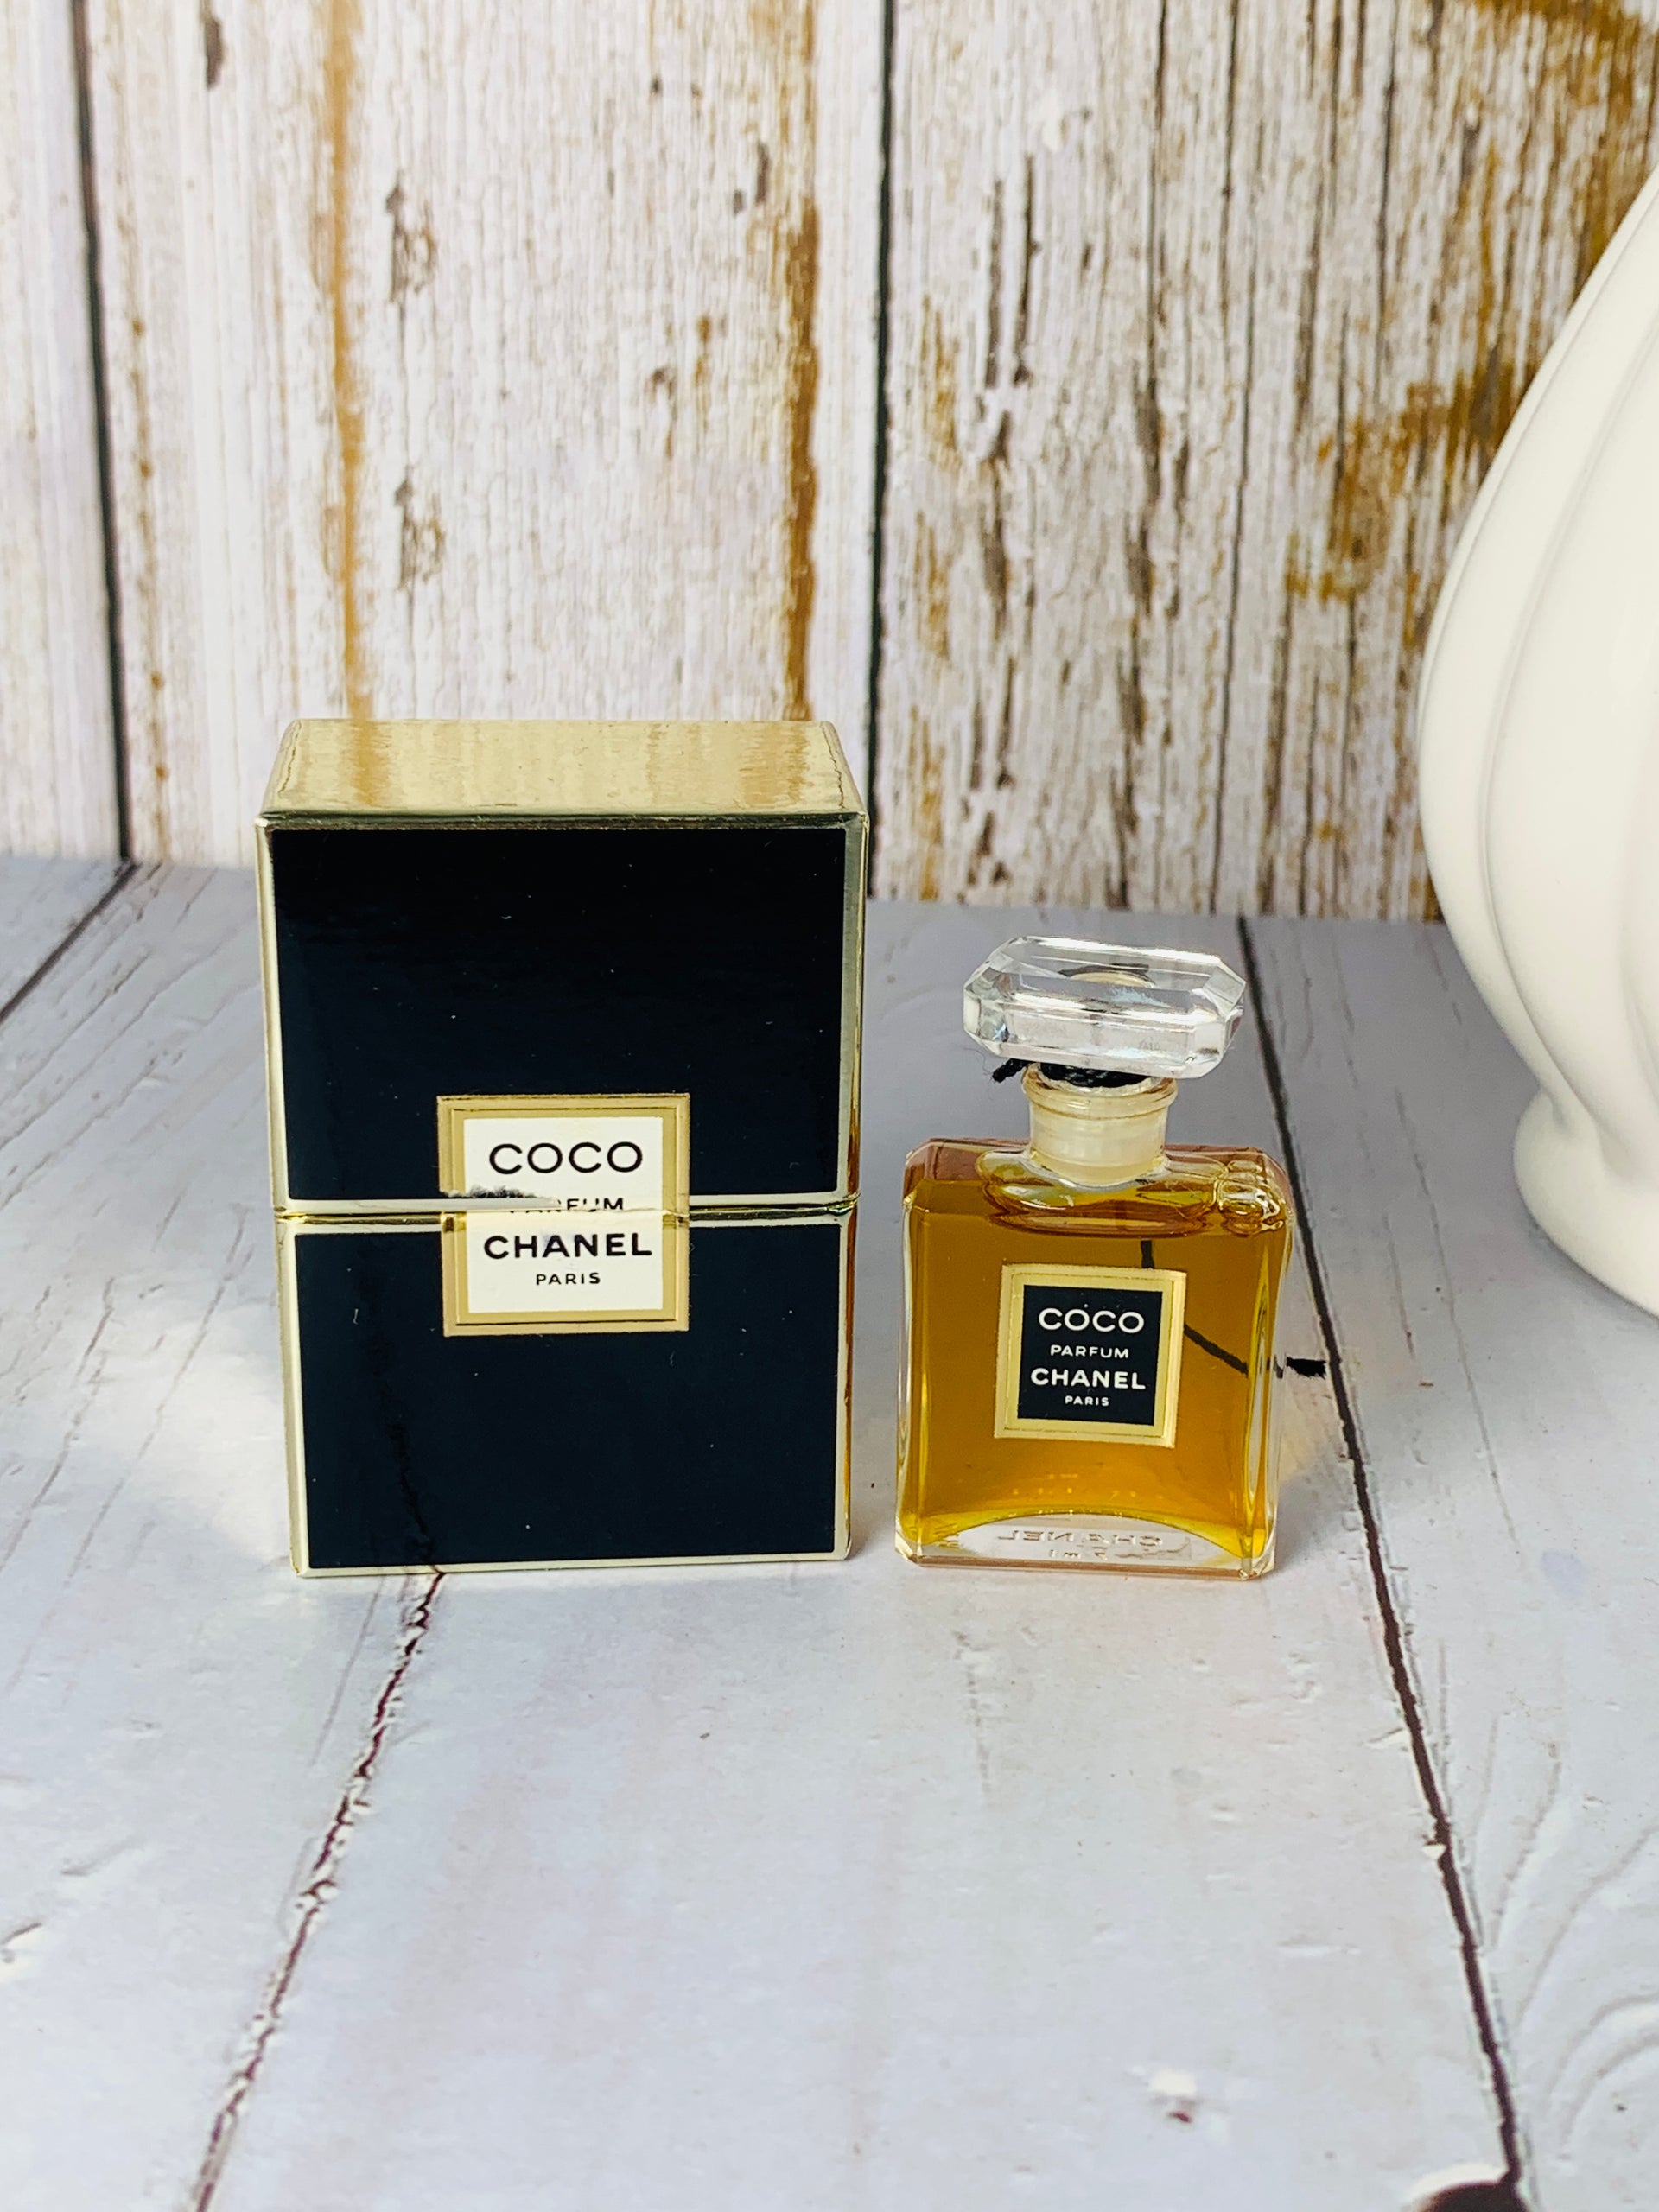 perfume coco chanel #5 para mujer original